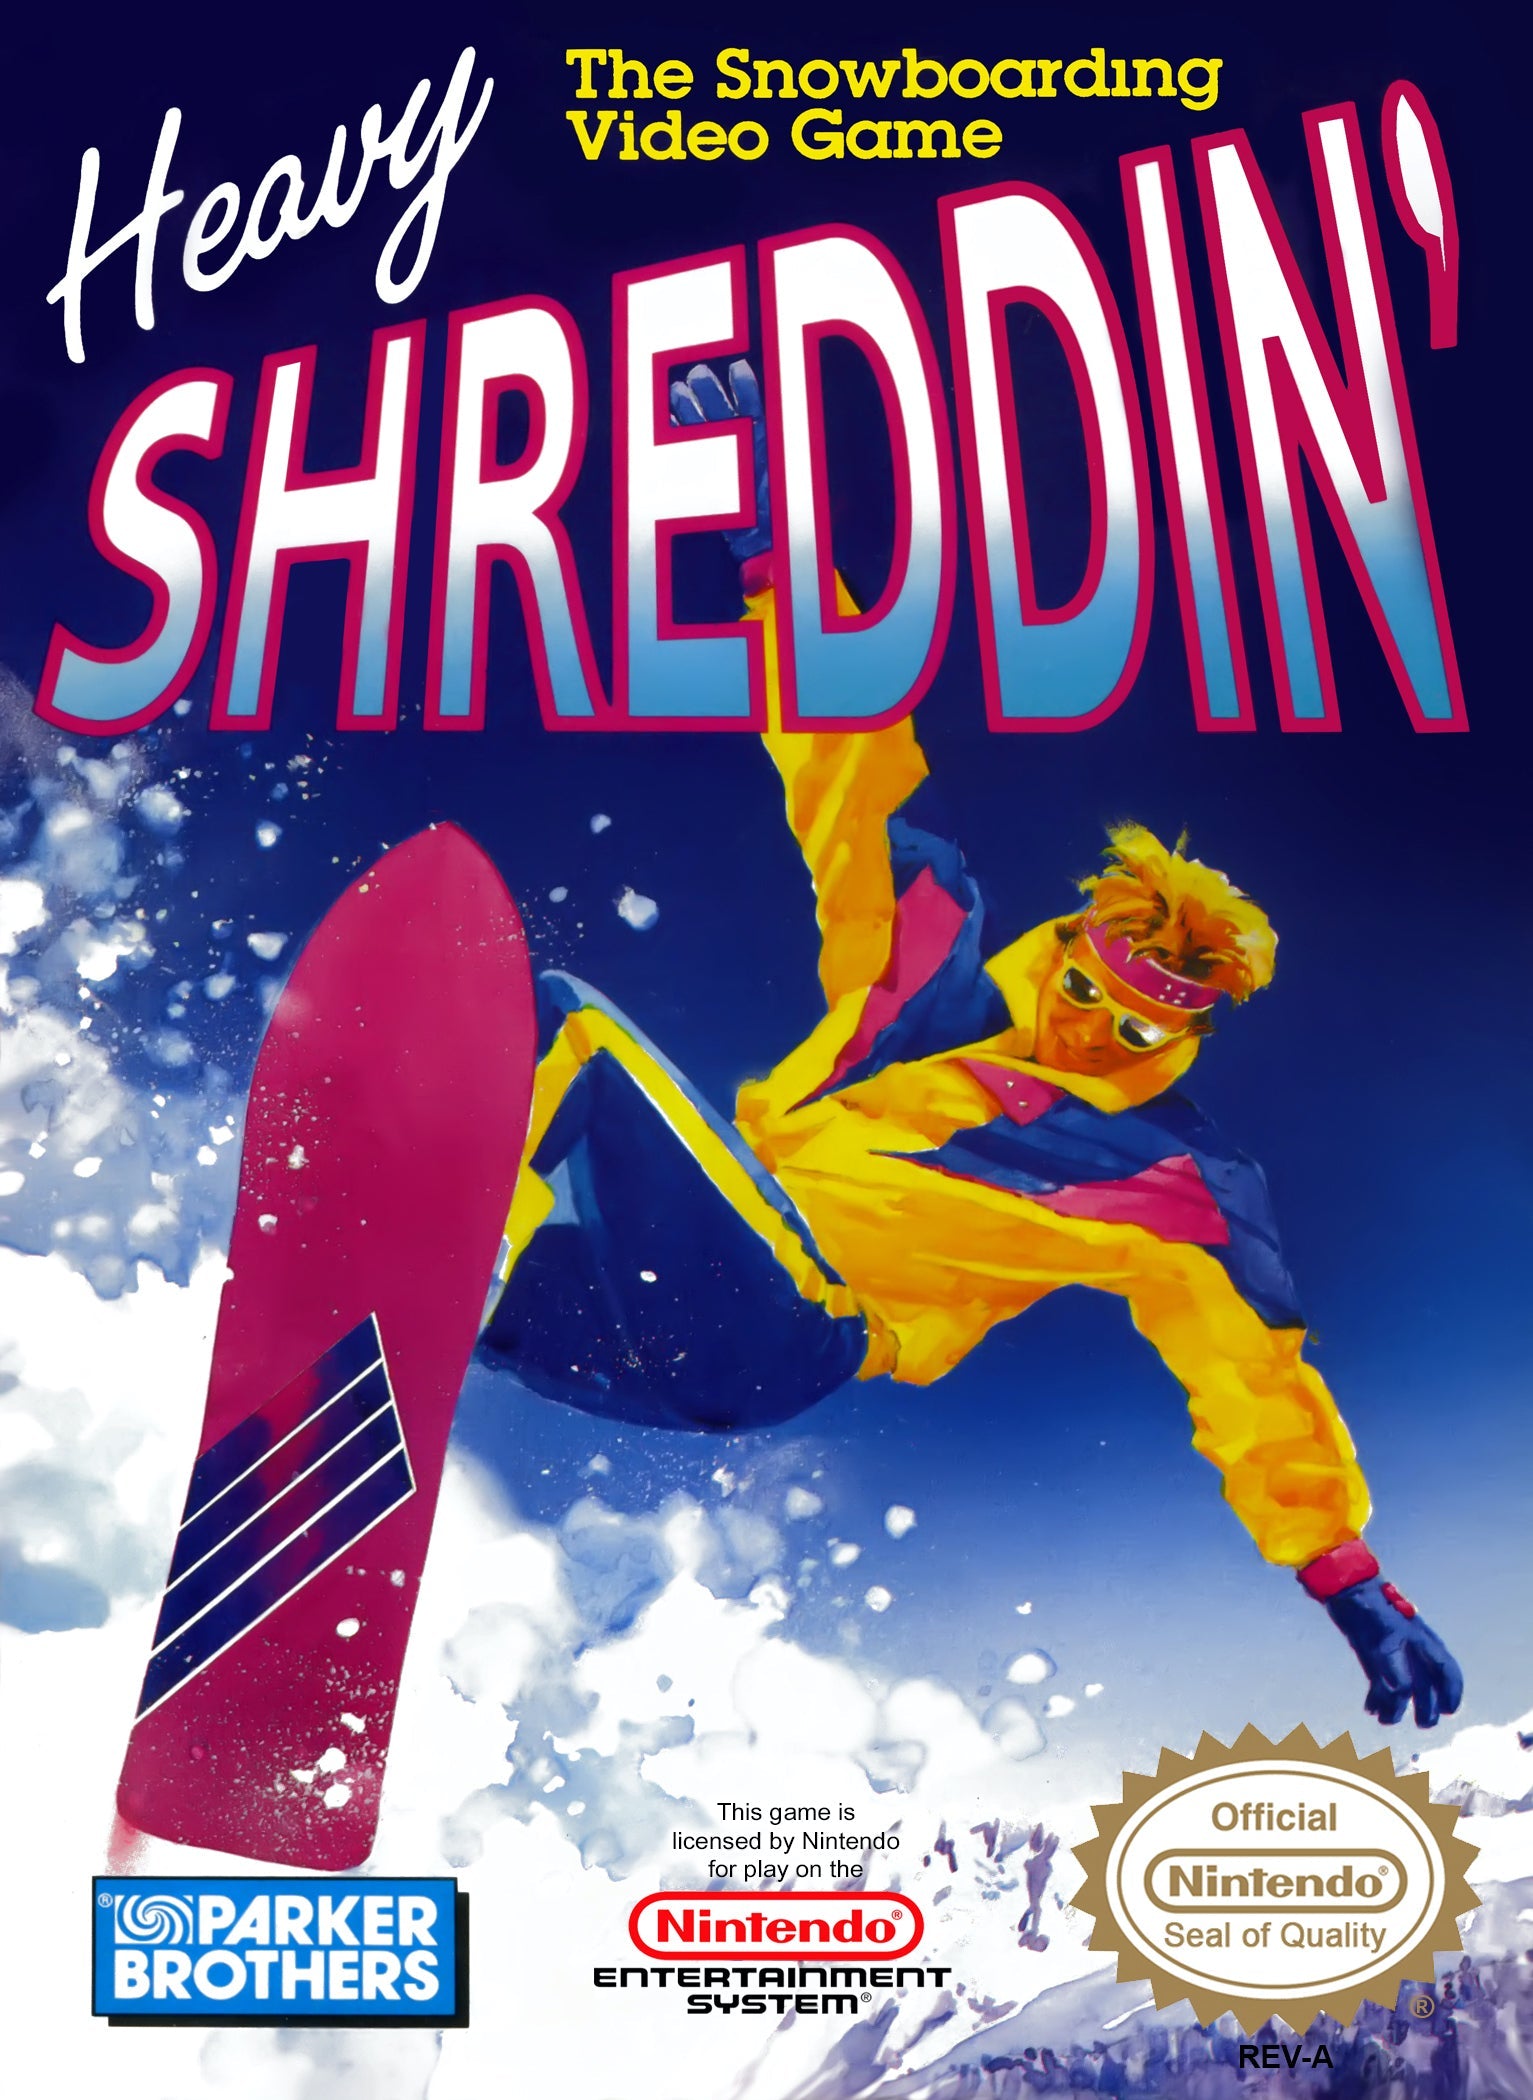 Heavy Shreddin' Cover Art and Product Photo